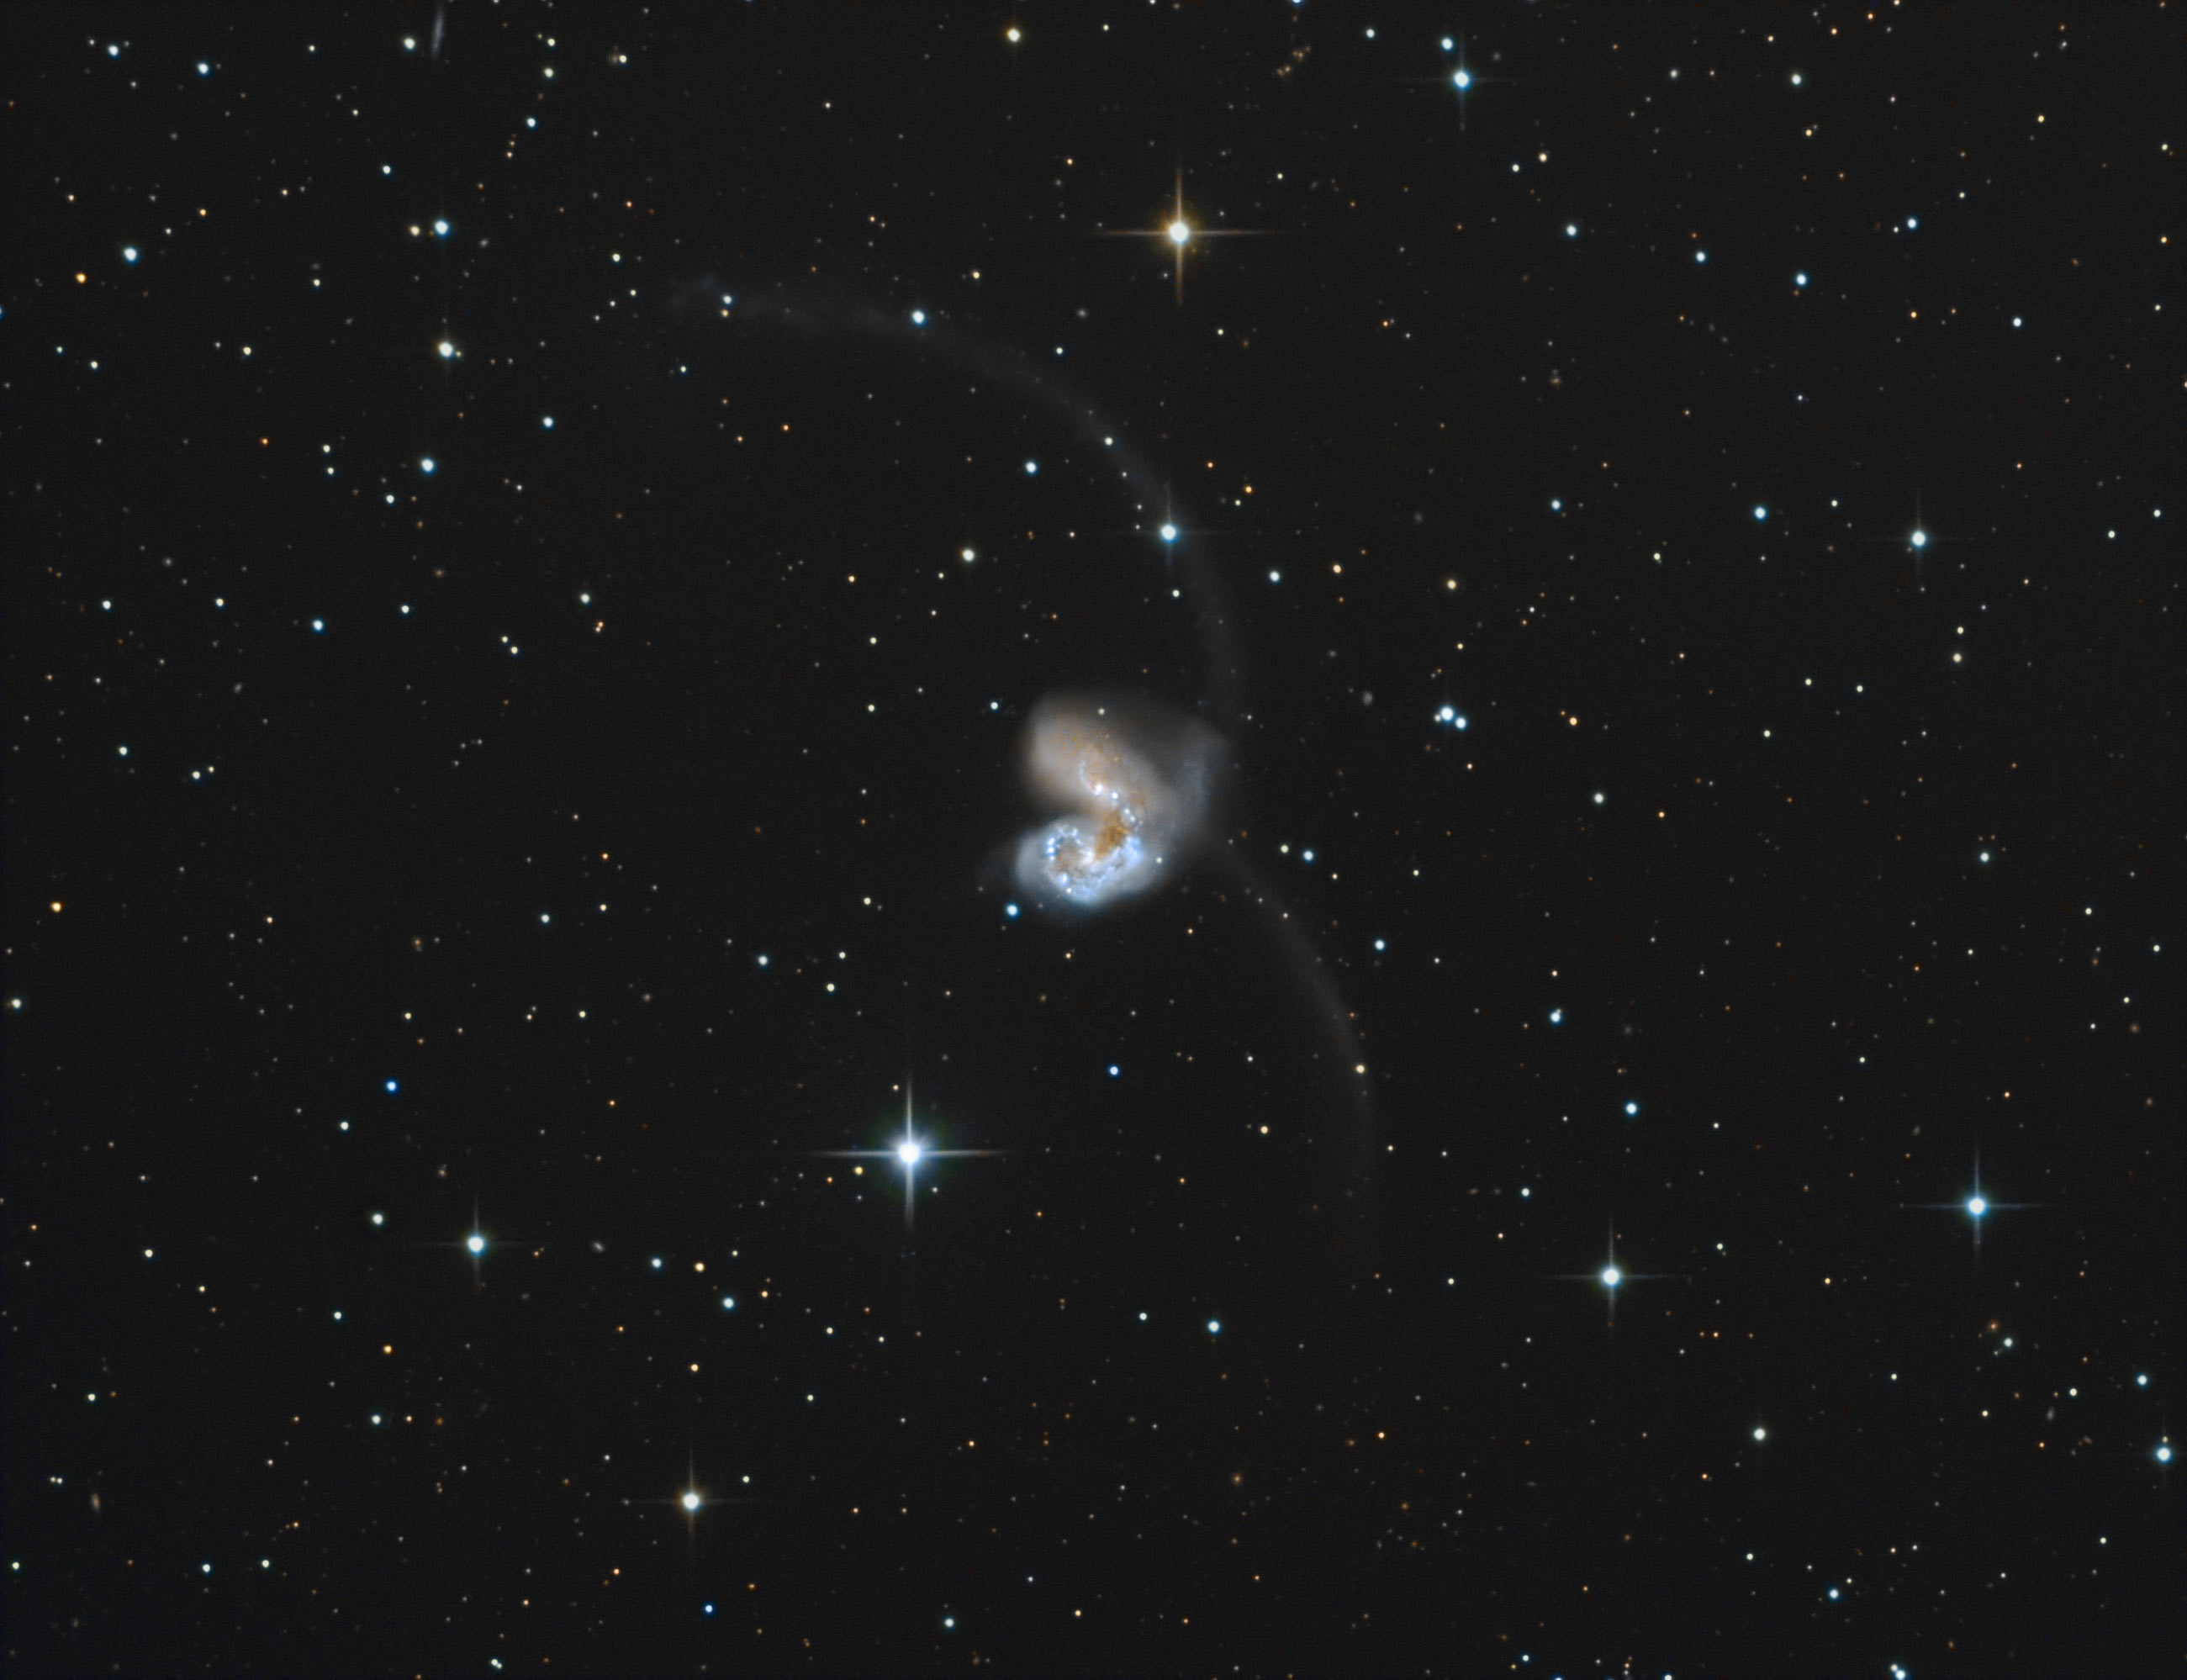 Les antennes - NGC 4038 & 4039